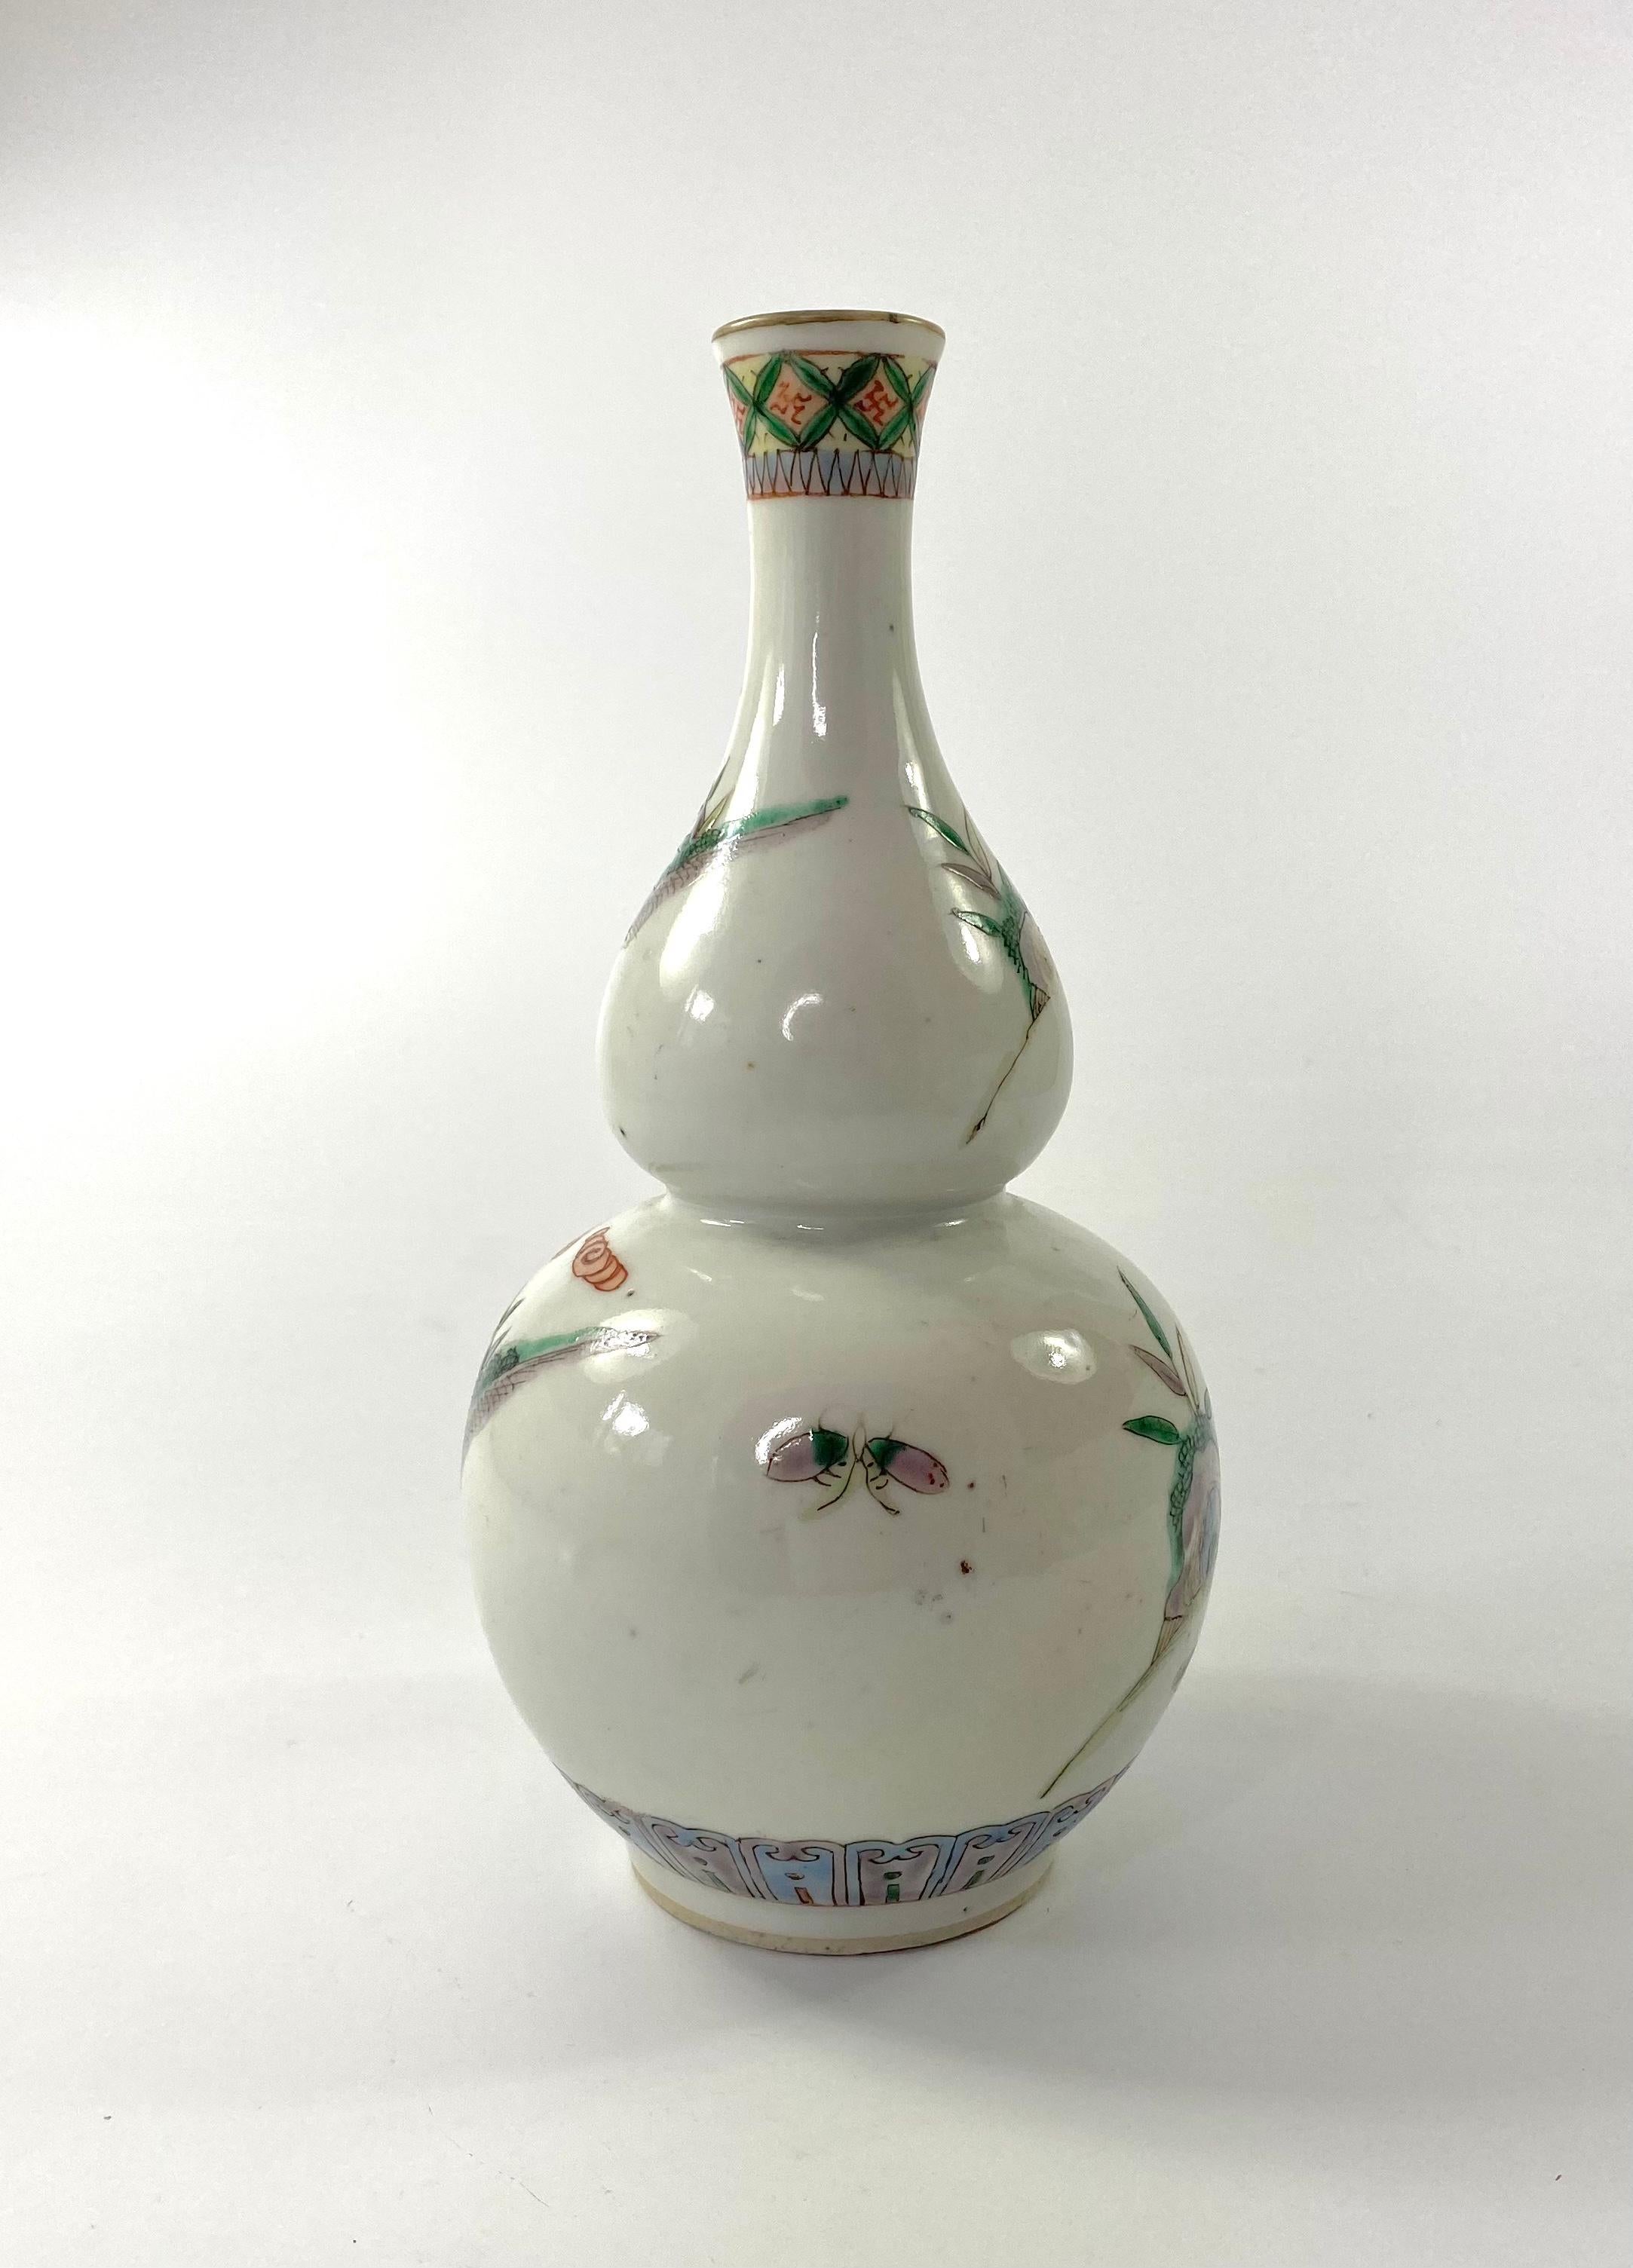 Fired Chinese Porcelain Double Gourd Vase, Famille Verte, c. 1880, Qing Dynasty